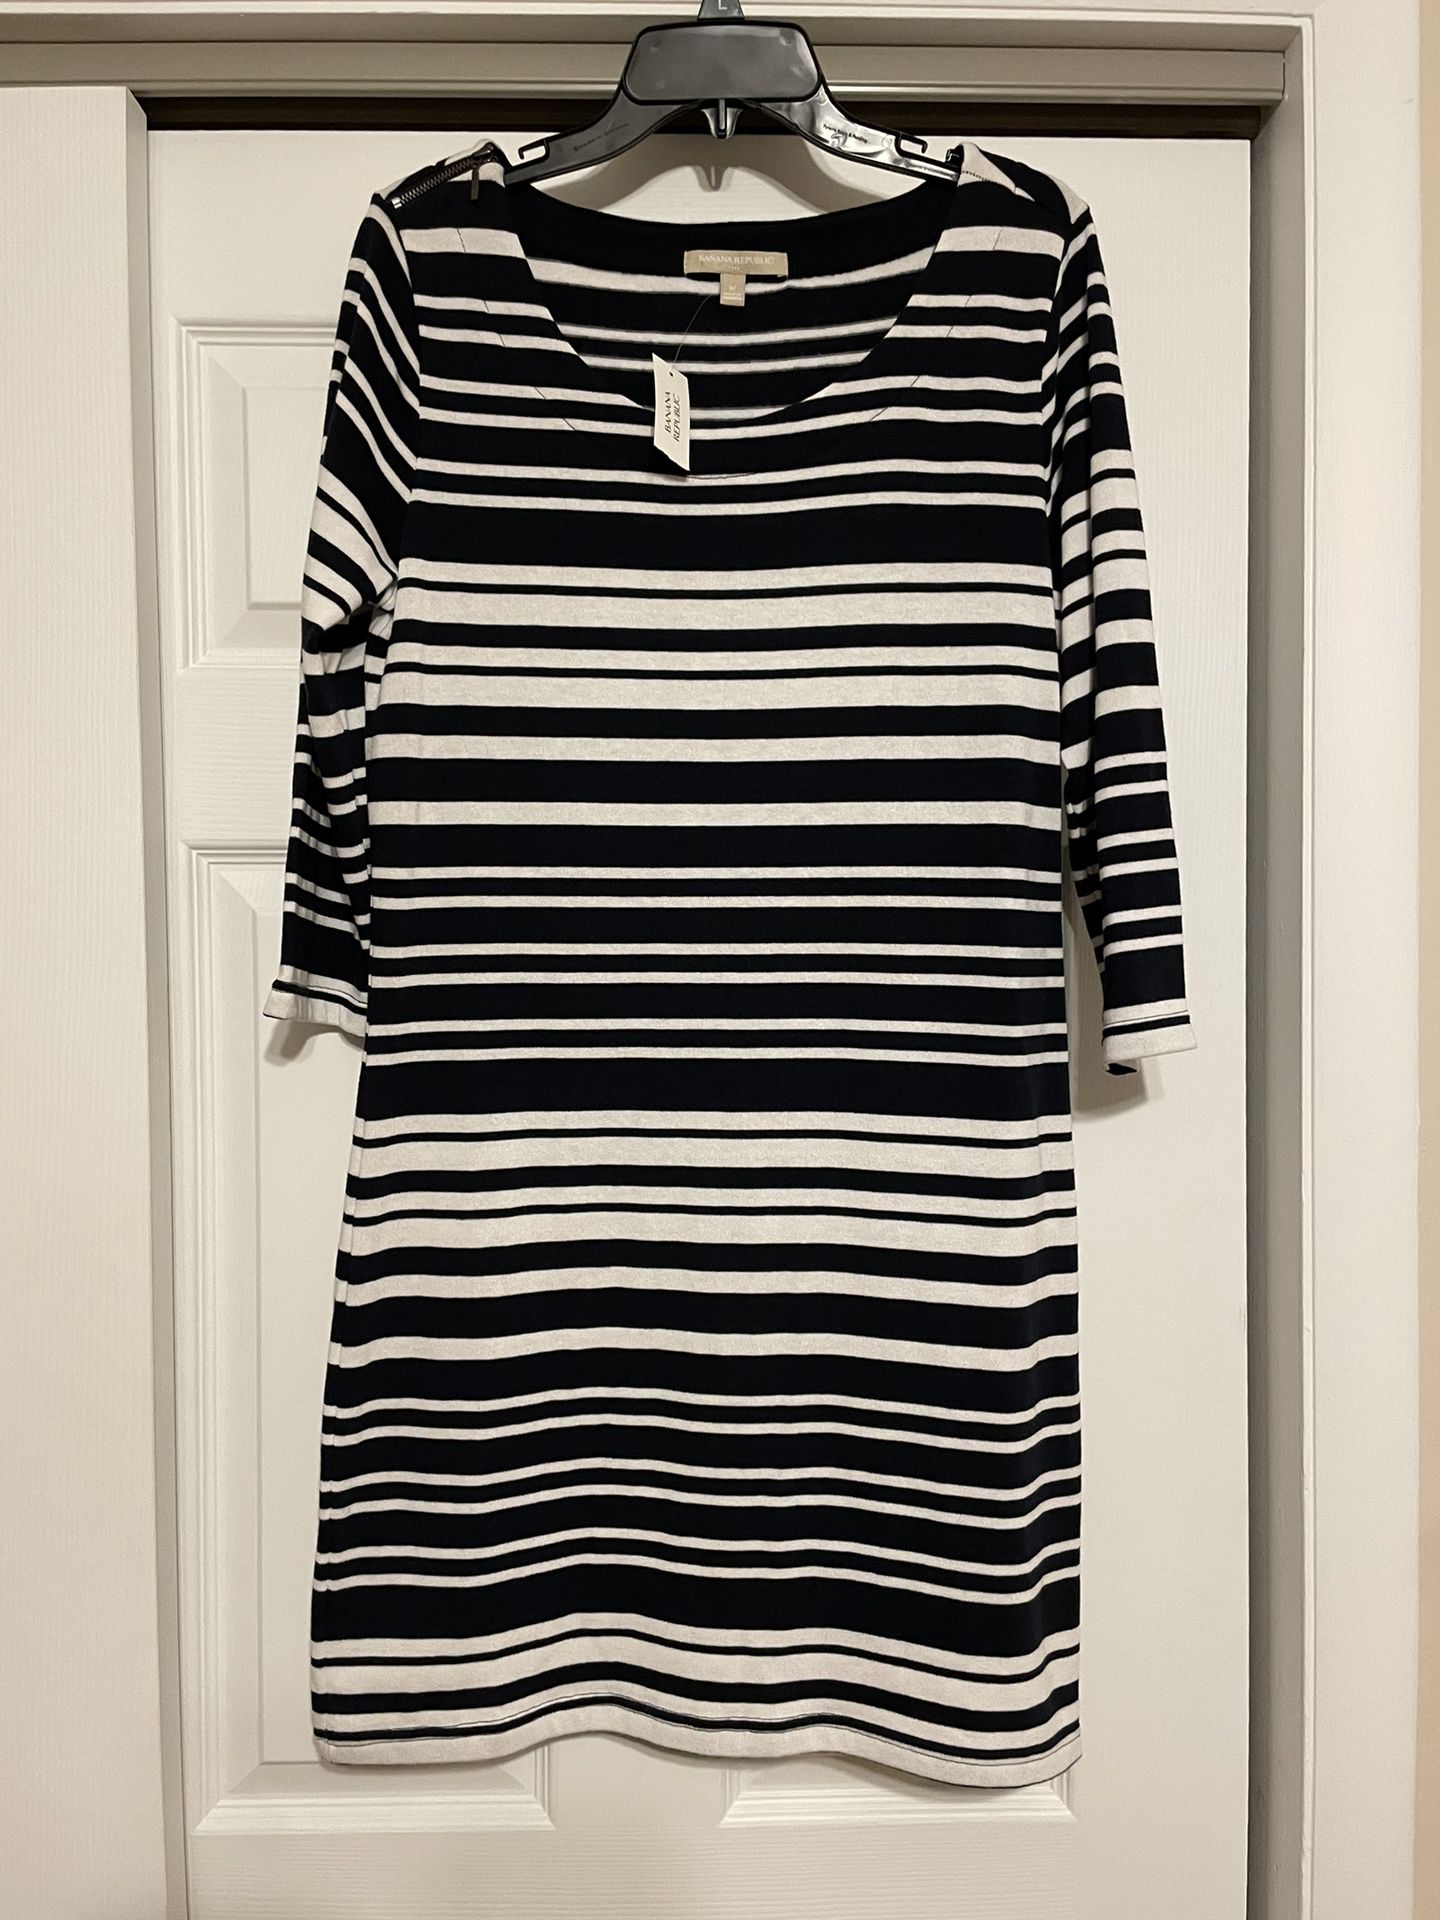 Brand New Banana Republic Black & White Striped Sweater Dress - Size Medium